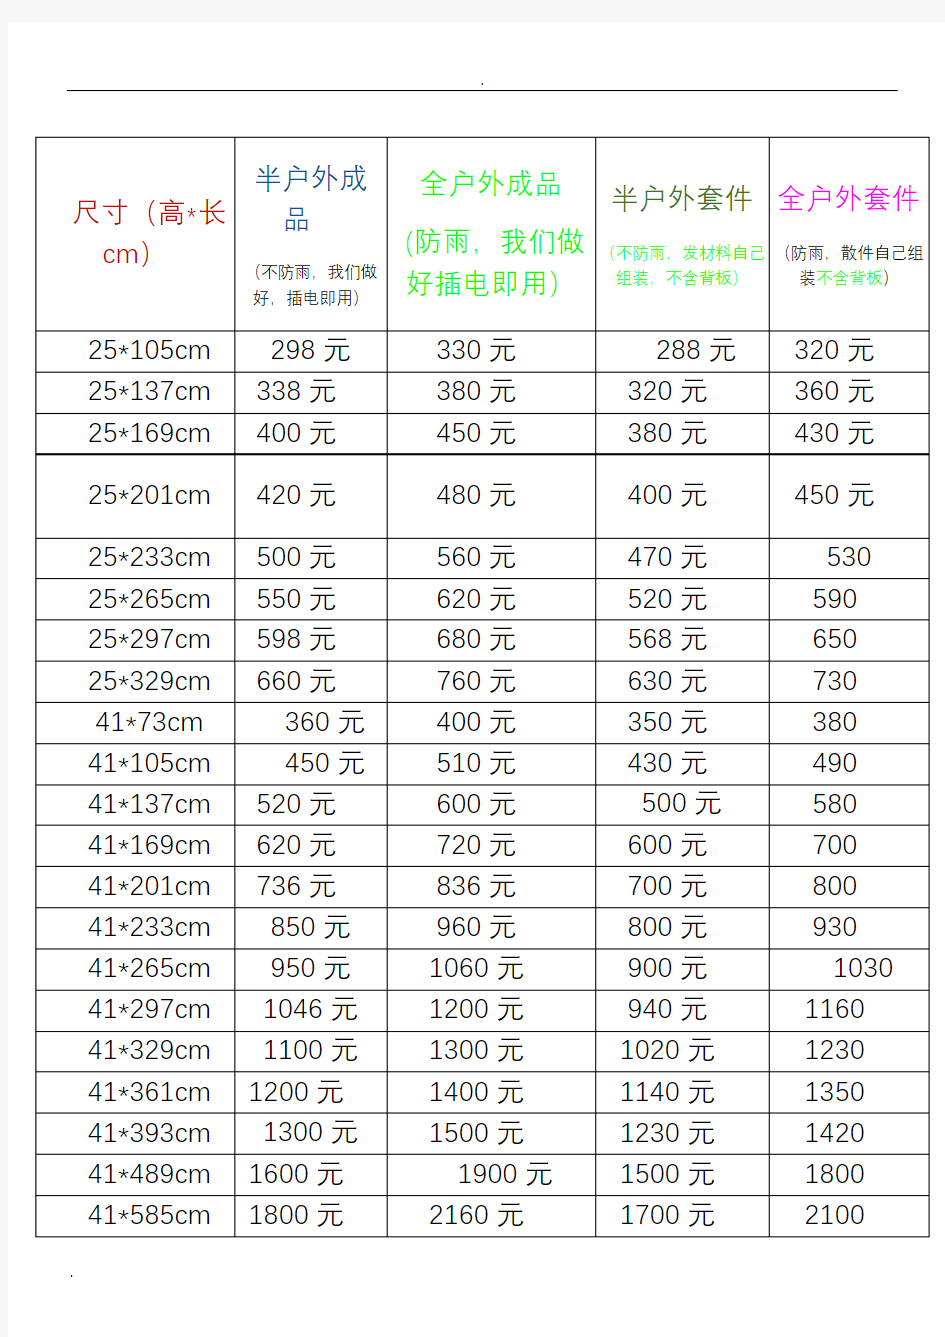 LED显示屏常用尺寸价格对照表(参考表)